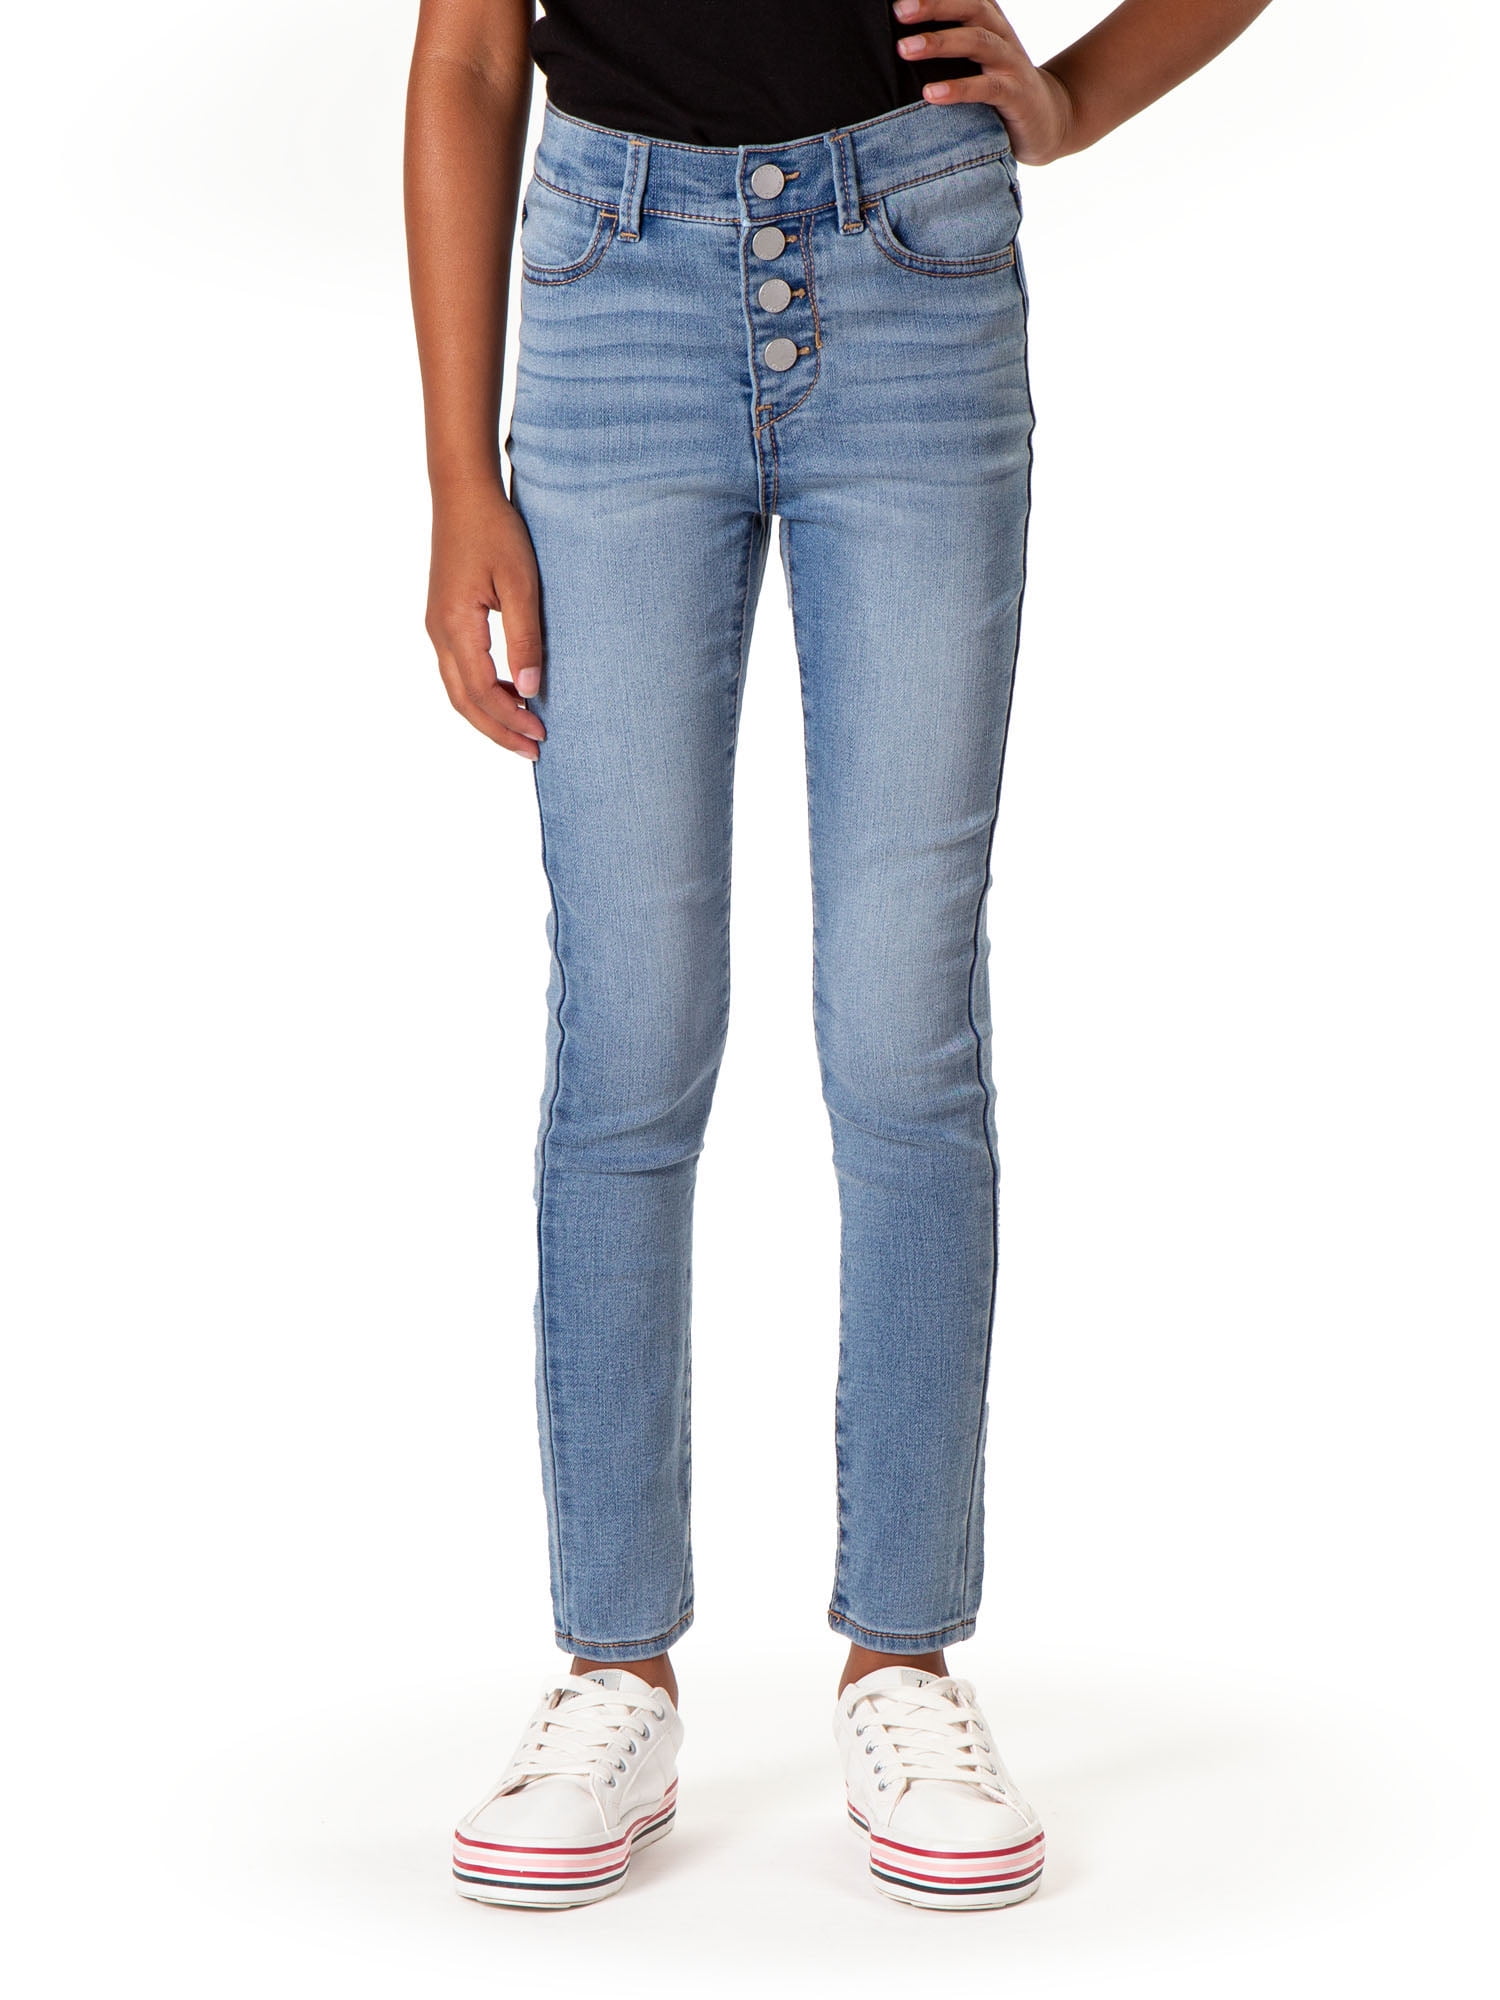 Jordache Girls Skinny High Jeans, Sizes 5-18 & Slim Walmart.com